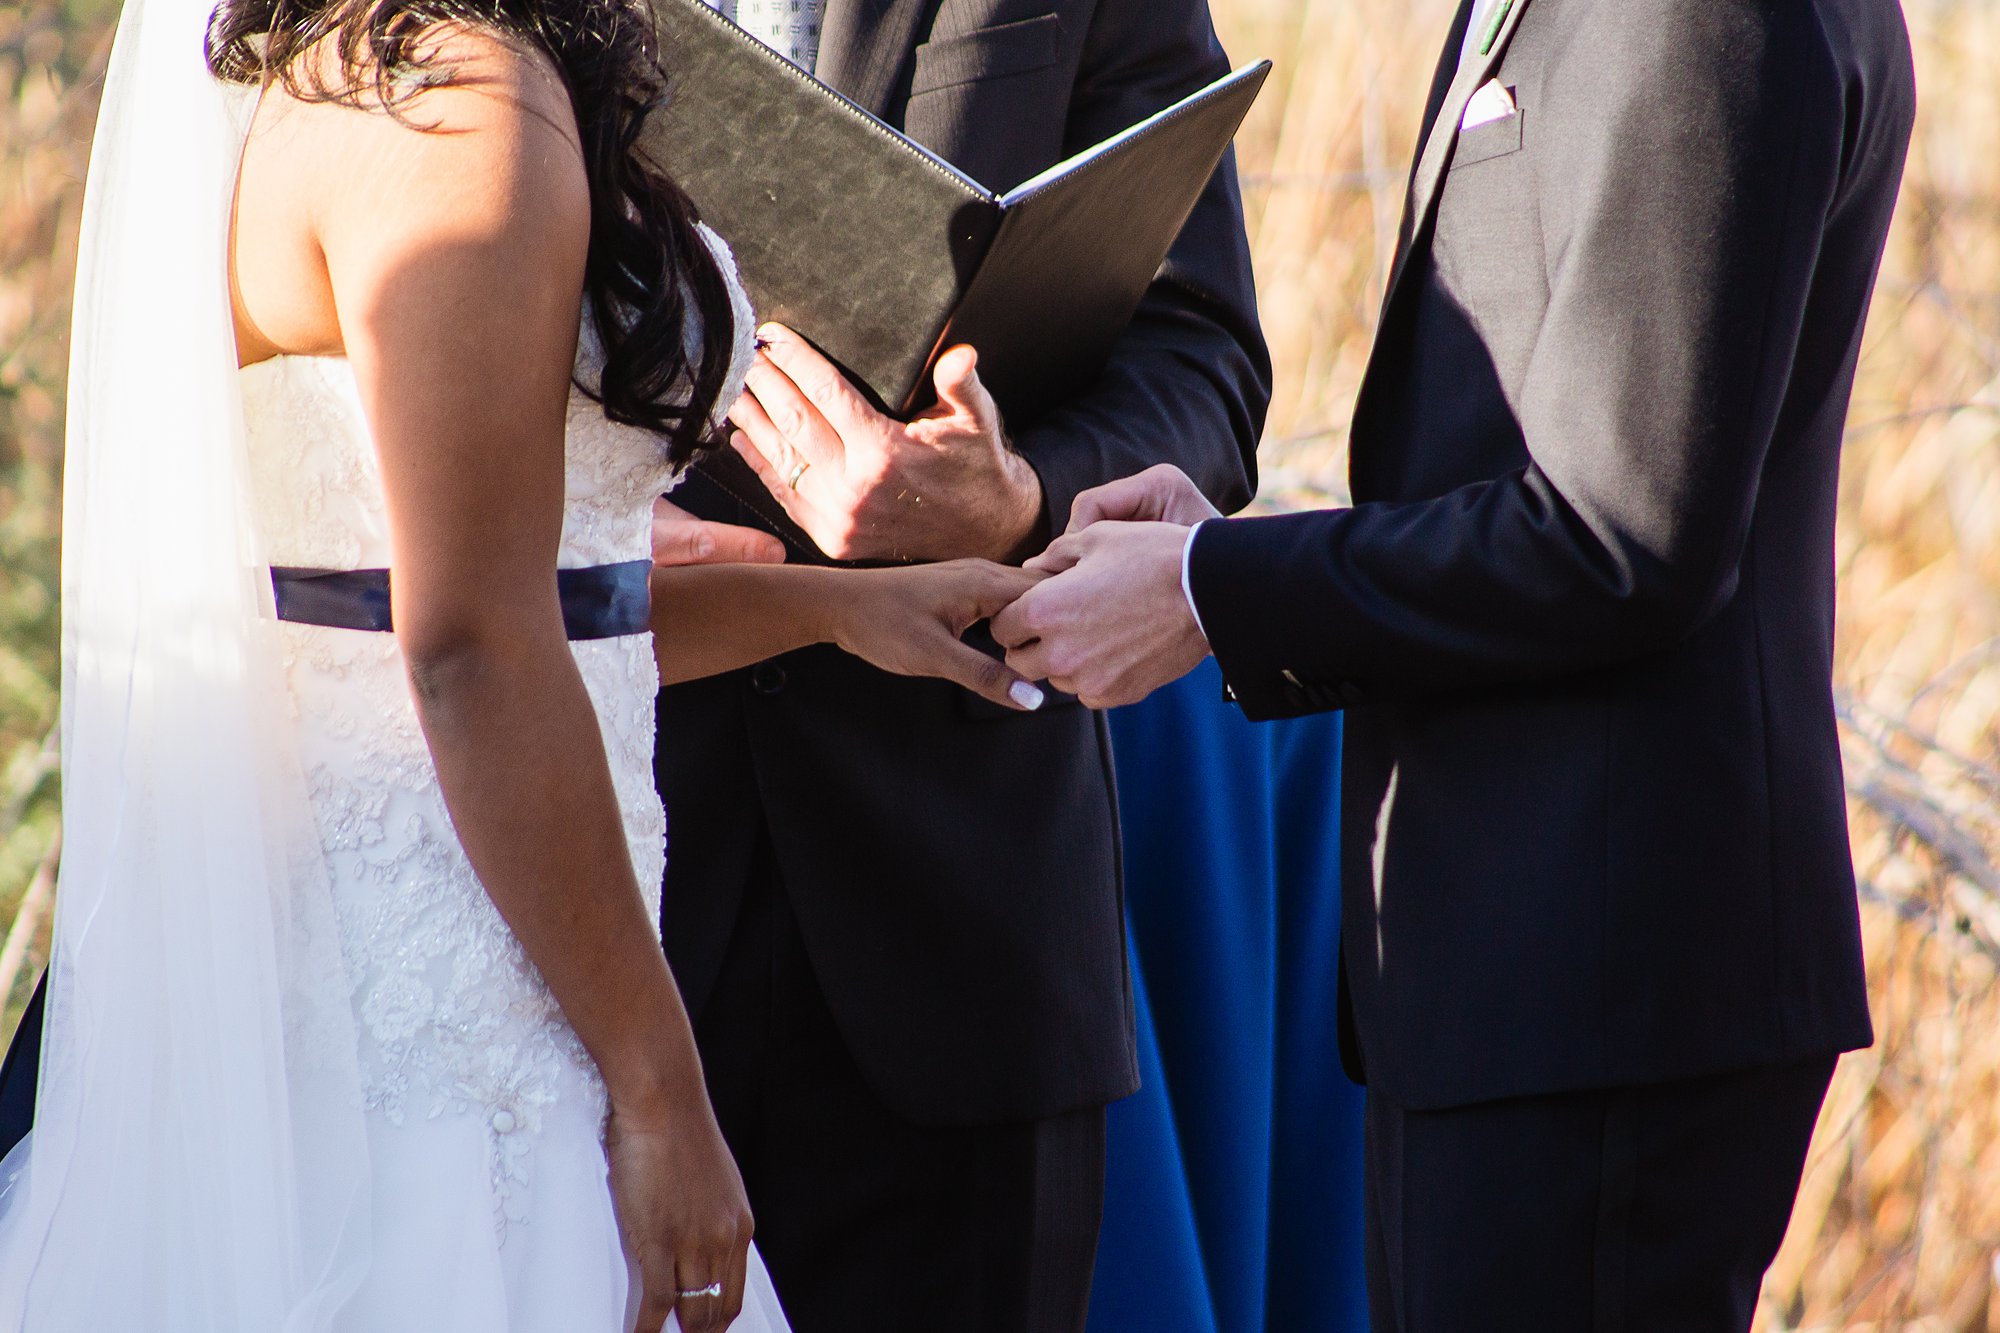 Groom placing ring on bride's finger during wedding ceremony at the Rio Salado Audubon by Phoenix wedding photographers PMA Photography.